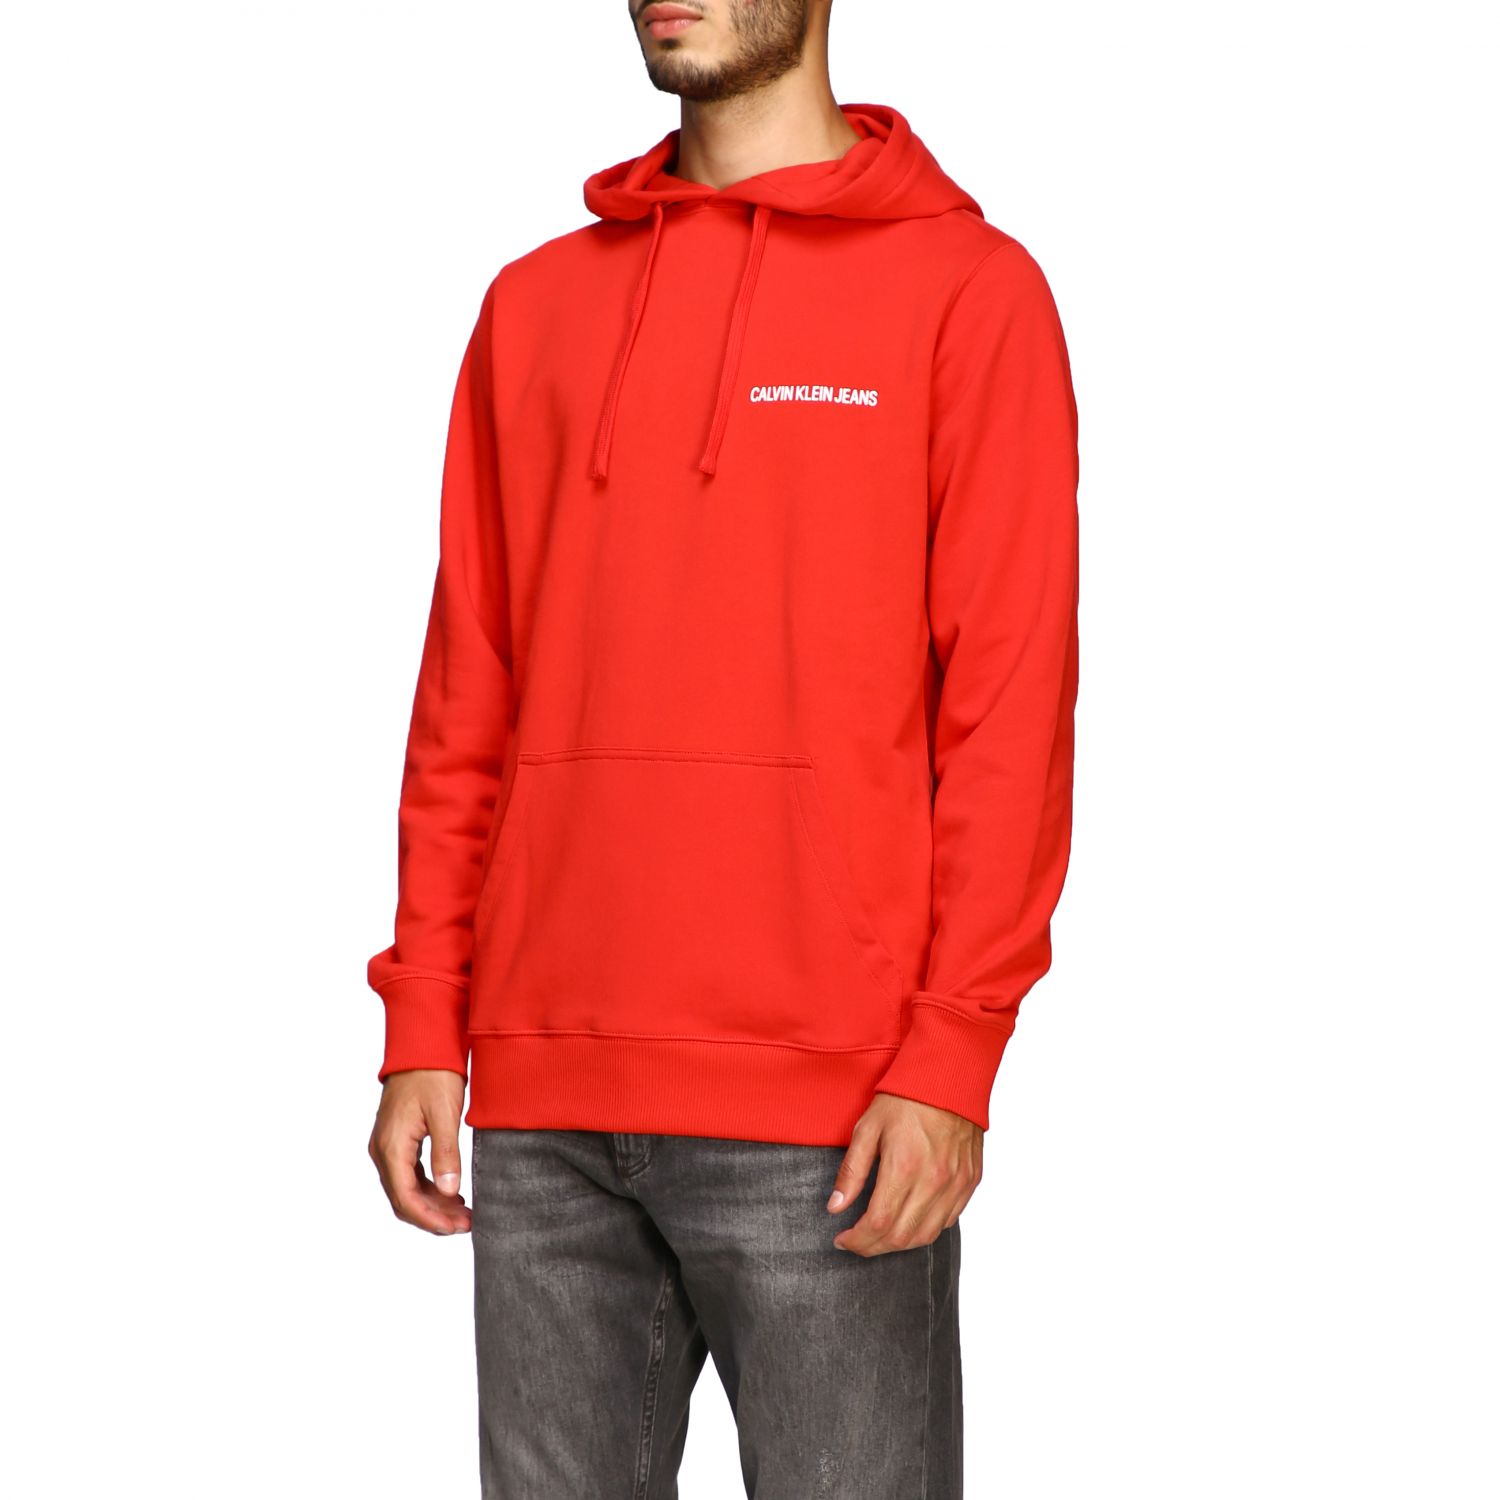 Calvin Klein Jeans Outlet: sweatshirt for men - Red | Calvin Klein Jeans  sweatshirt J30J313700 online on 